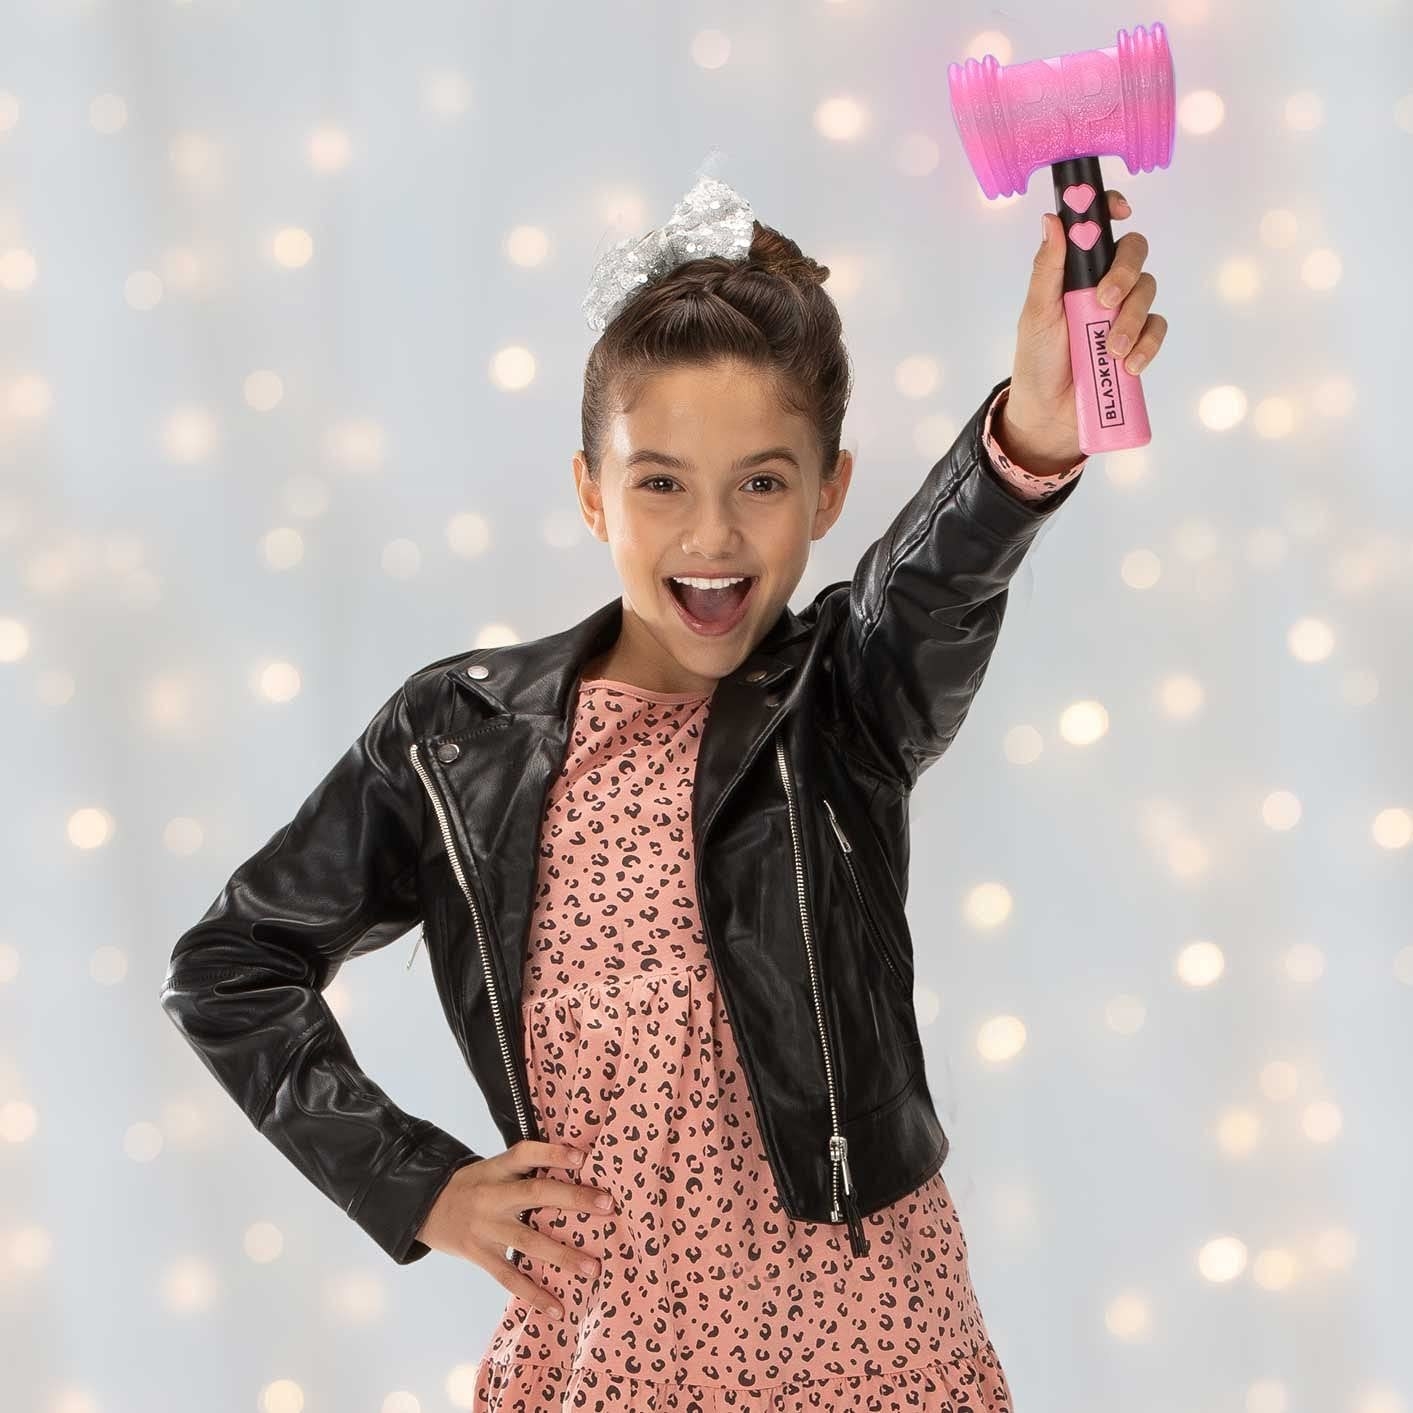 Child model wielding pink and black Blackpink lightstick